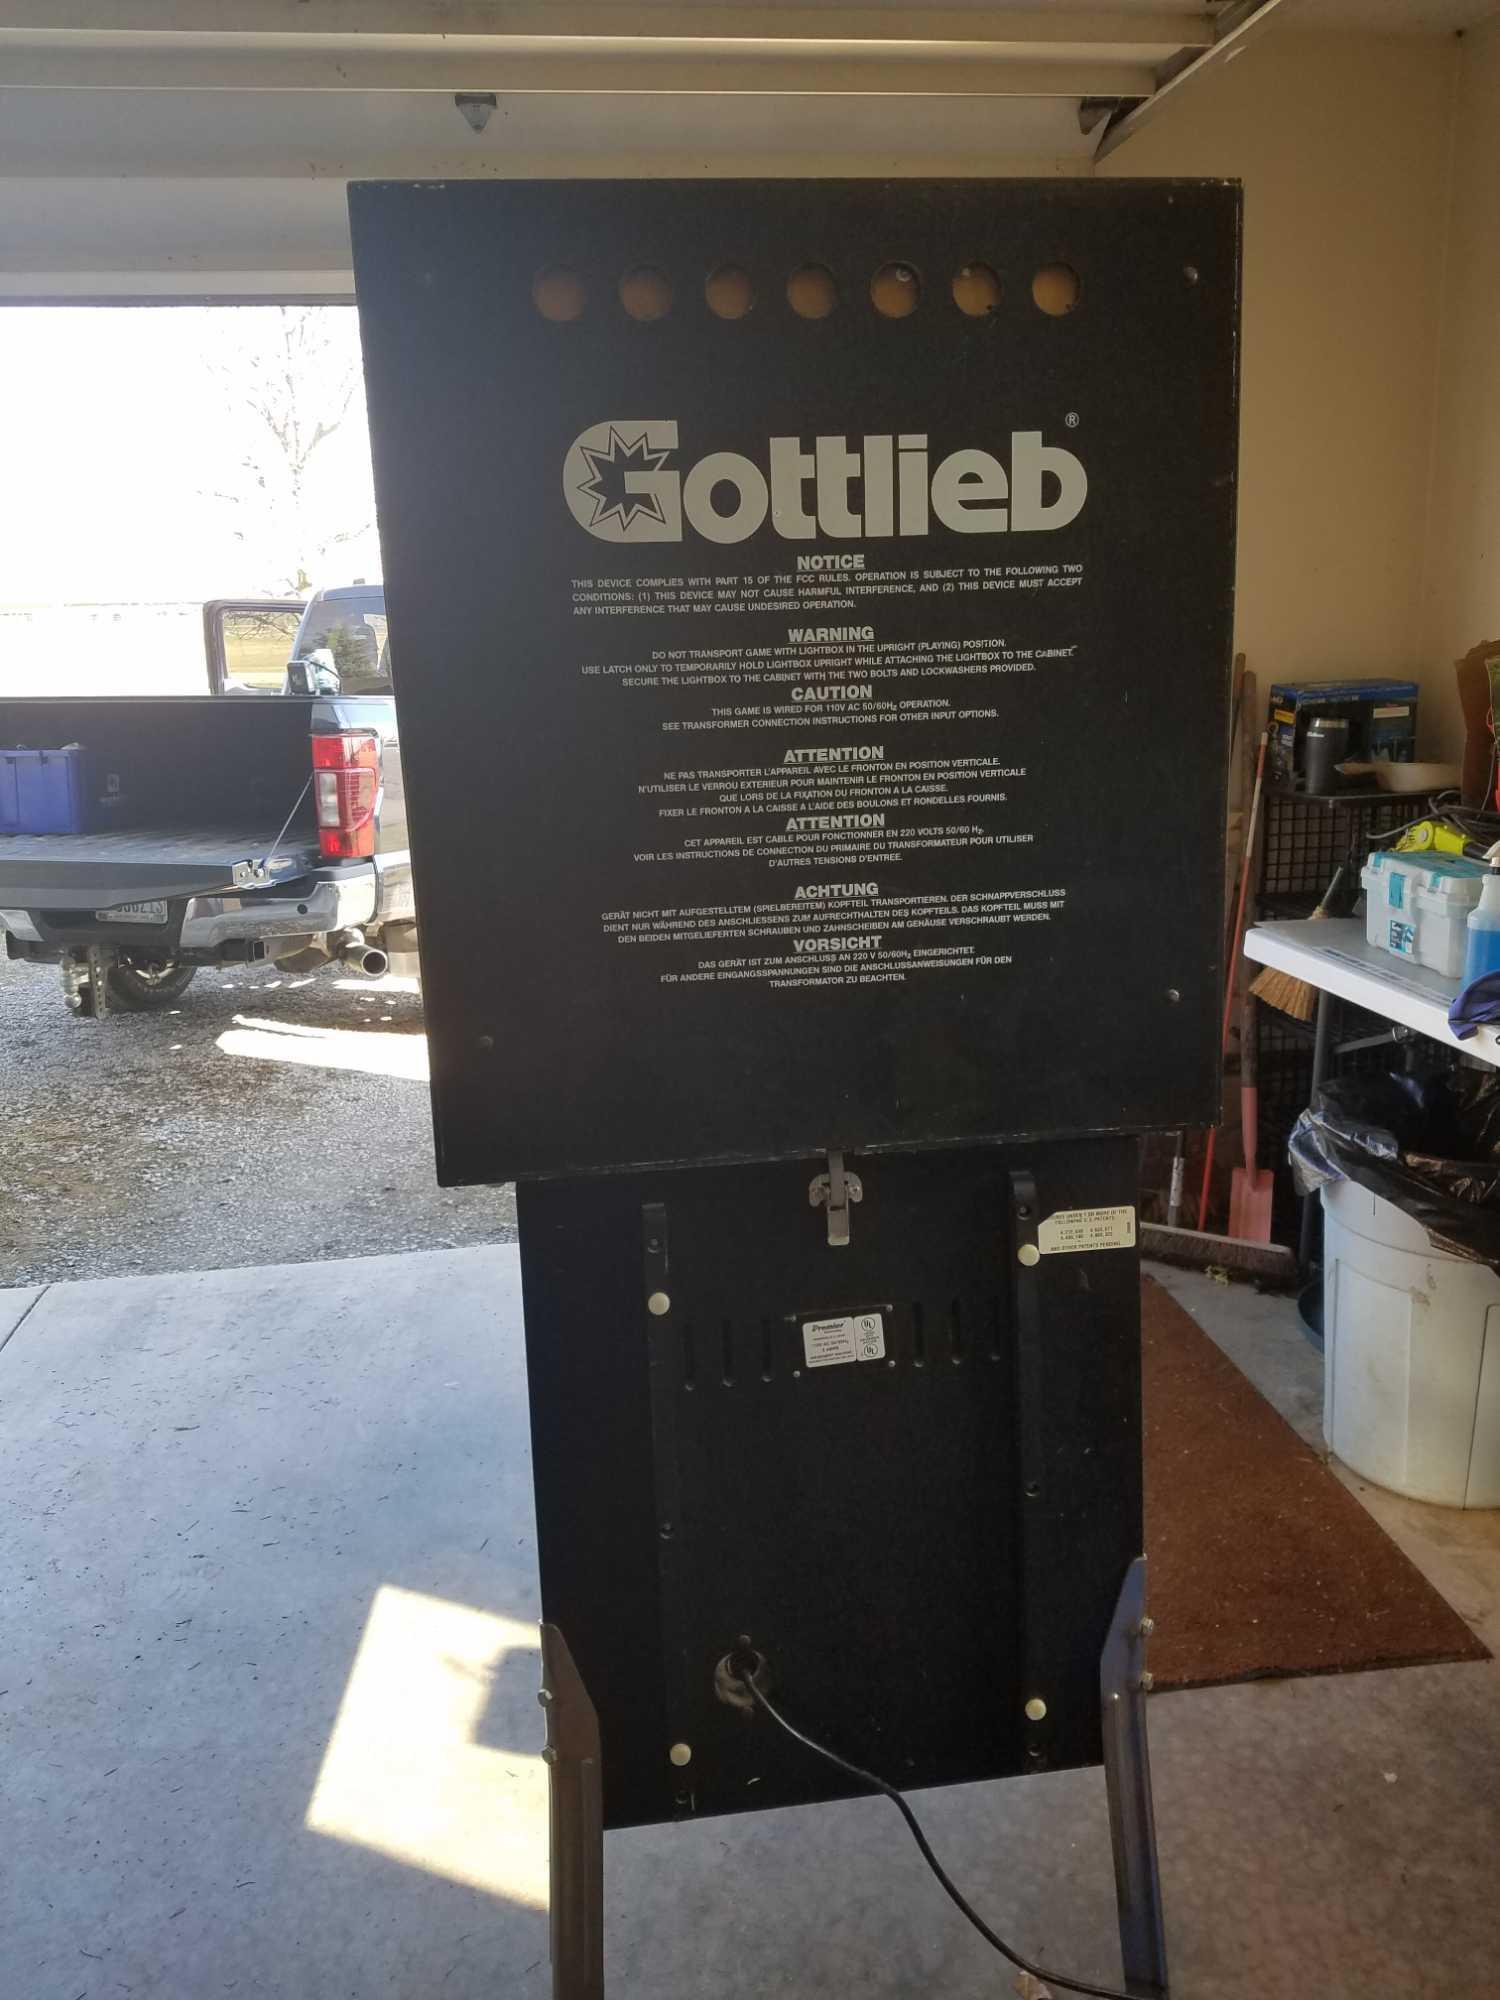 Gottlieb Shaq attaq pinball machine